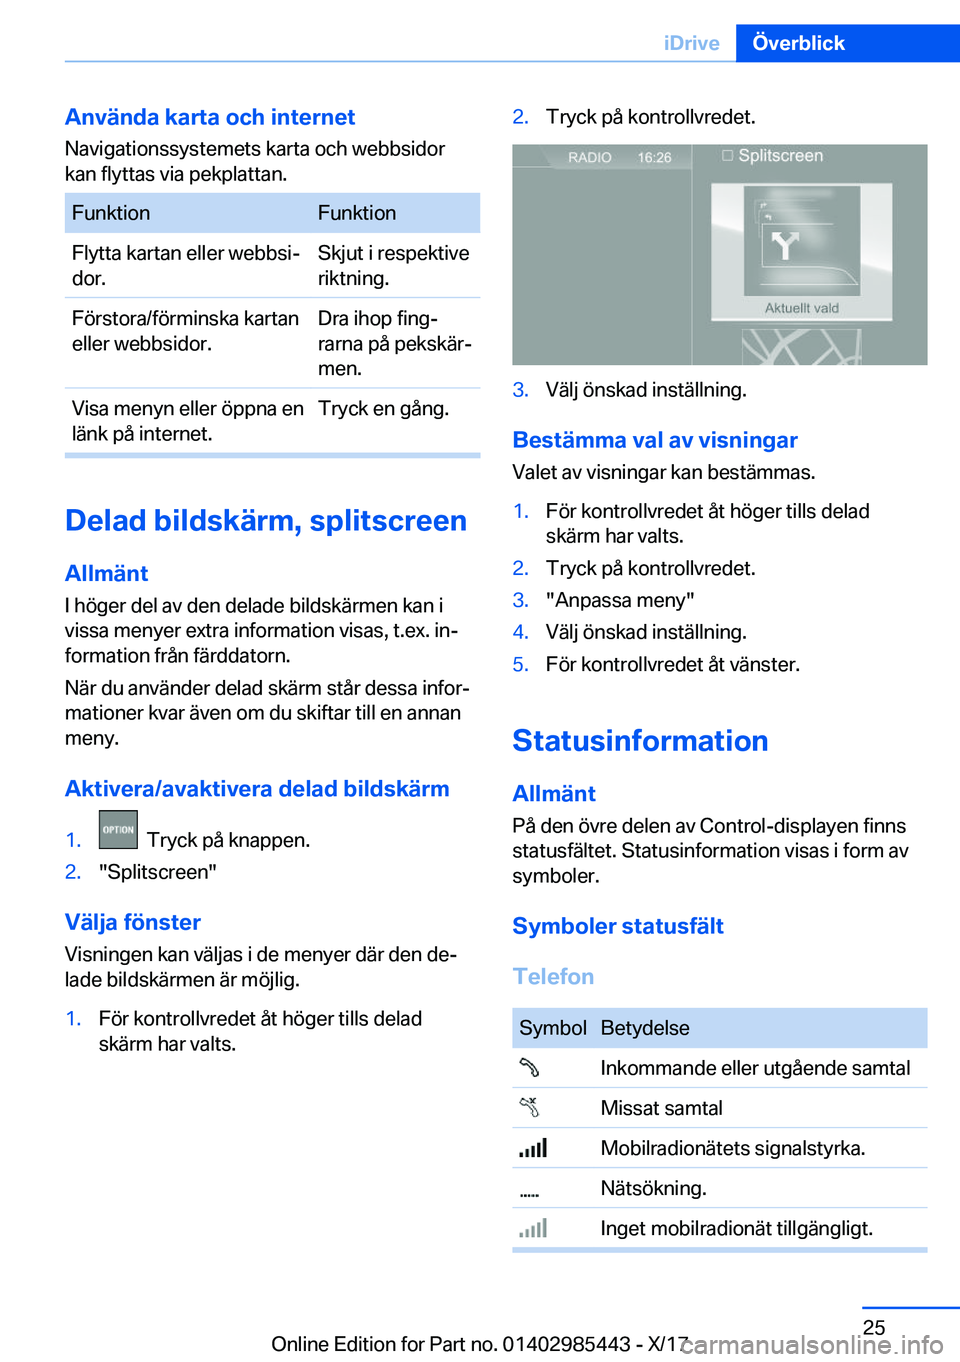 BMW X1 2018  InstruktionsbÖcker (in Swedish) �A�n�v�ä�n�d�a��k�a�r�t�a��o�c�h��i�n�t�e�r�n�e�t
�N�a�v�i�g�a�t�i�o�n�s�s�y�s�t�e�m�e�t�s� �k�a�r�t�a� �o�c�h� �w�e�b�b�s�i�d�o�r
�k�a�n� �f�l�y�t�t�a�s� �v�i�a� �p�e�k�p�l�a�t�t�a�n�.�F�u�n�k�t�